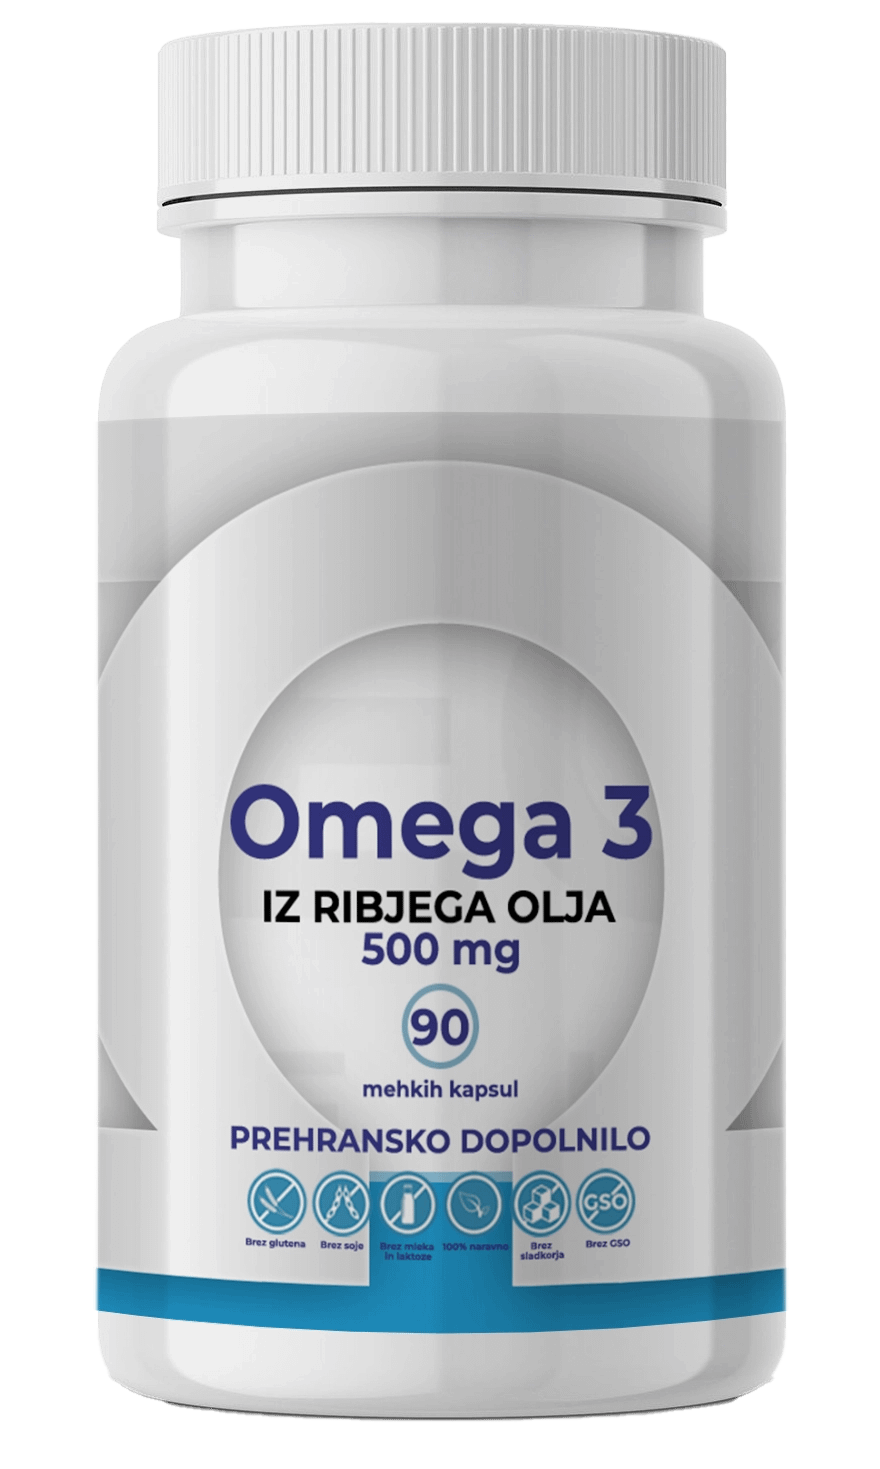 Omega 3 iz ribjega olja 500 mg